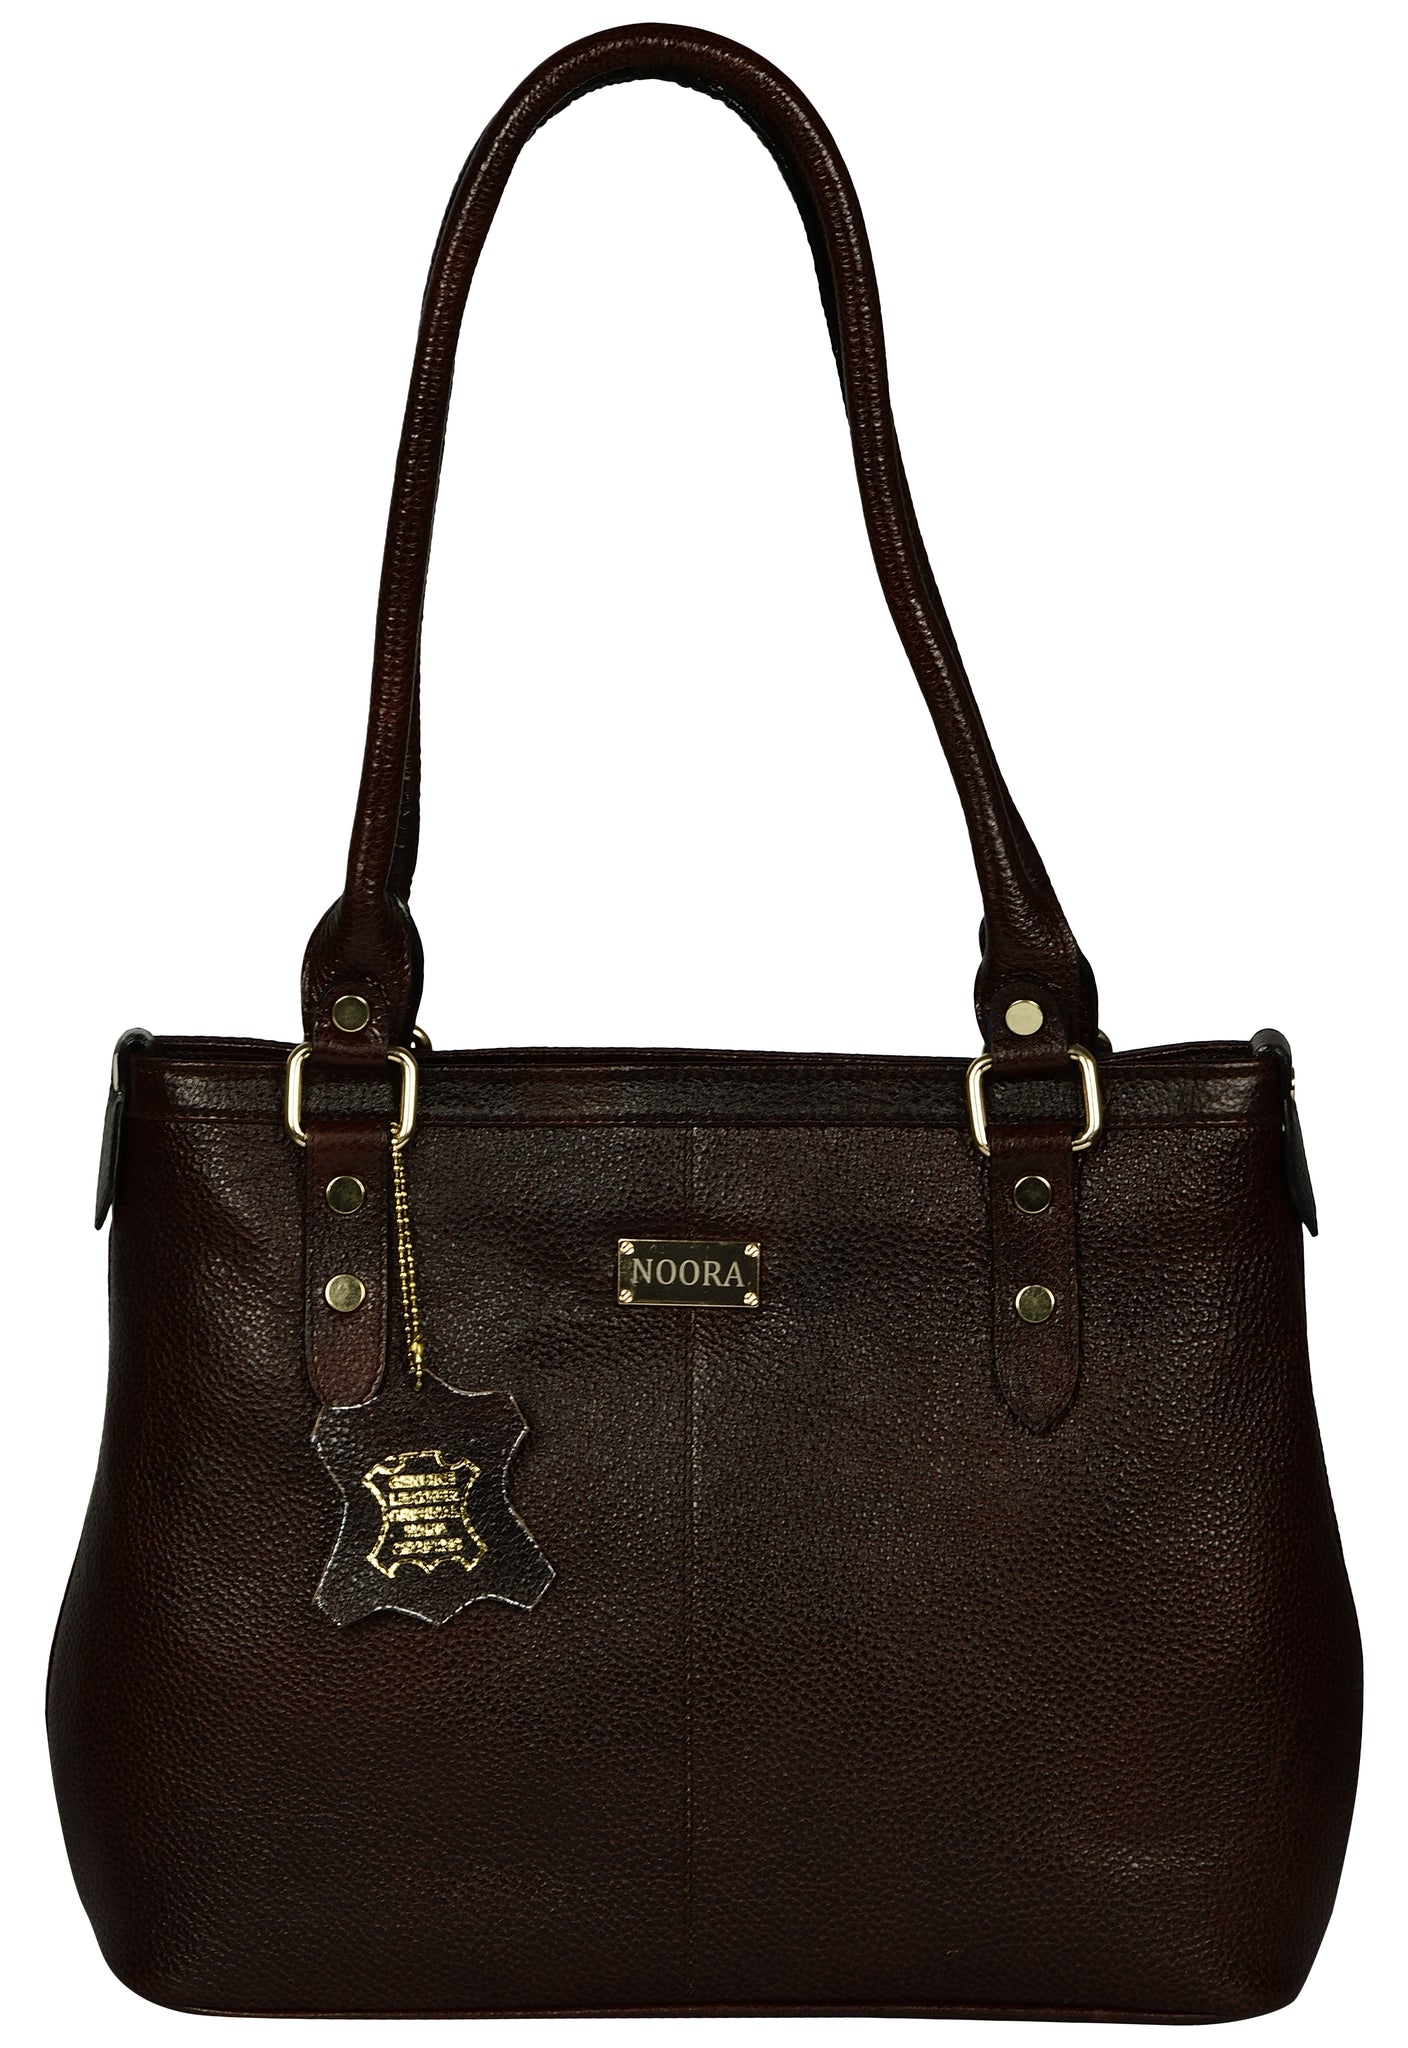 dark brown satchel leather bag